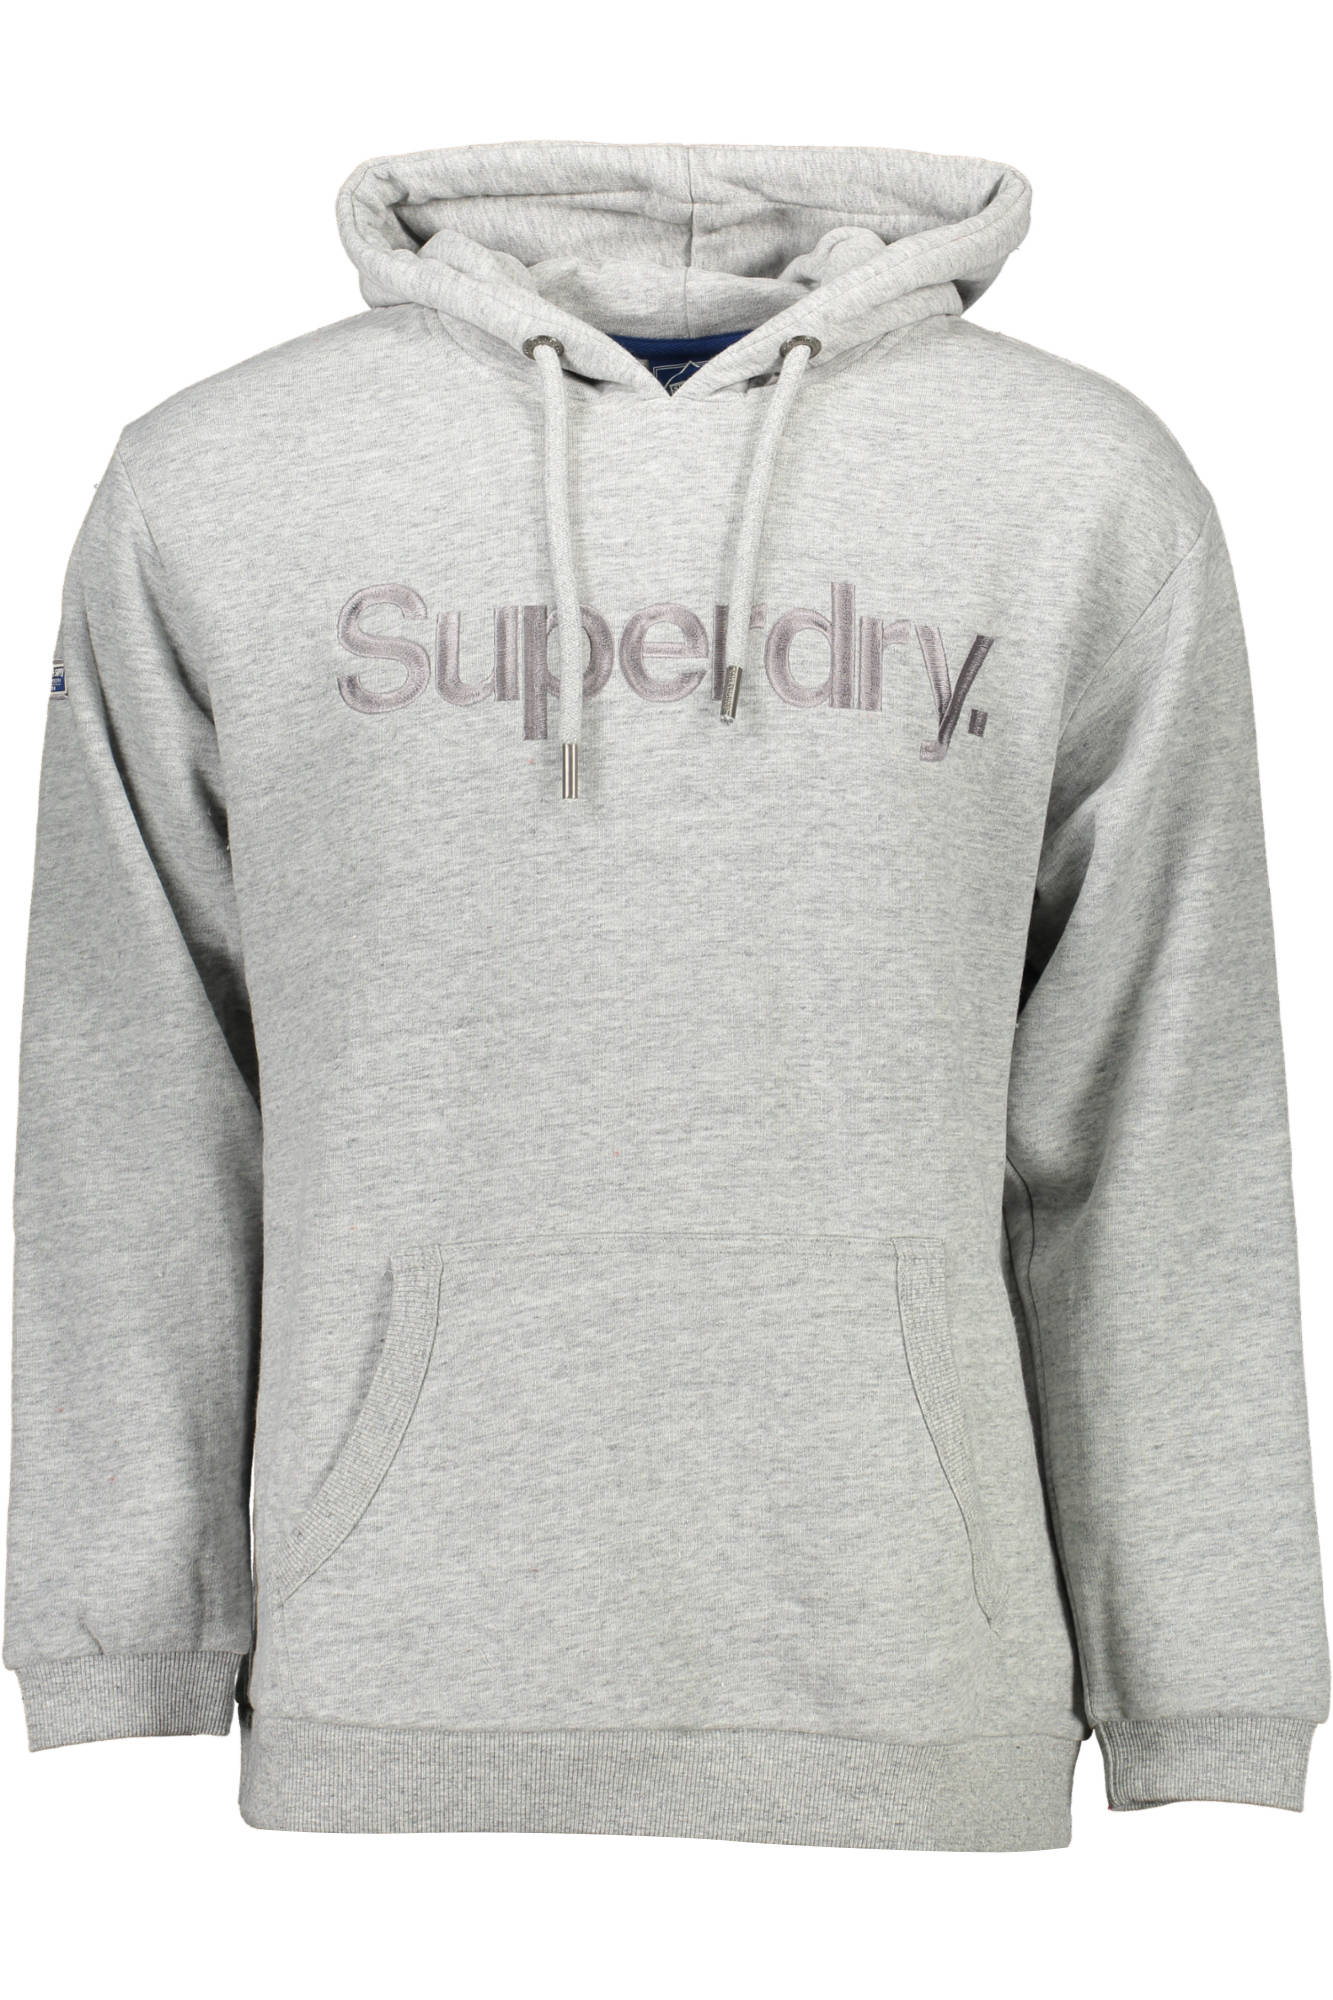 Superdry Gray Sweater - Fizigo